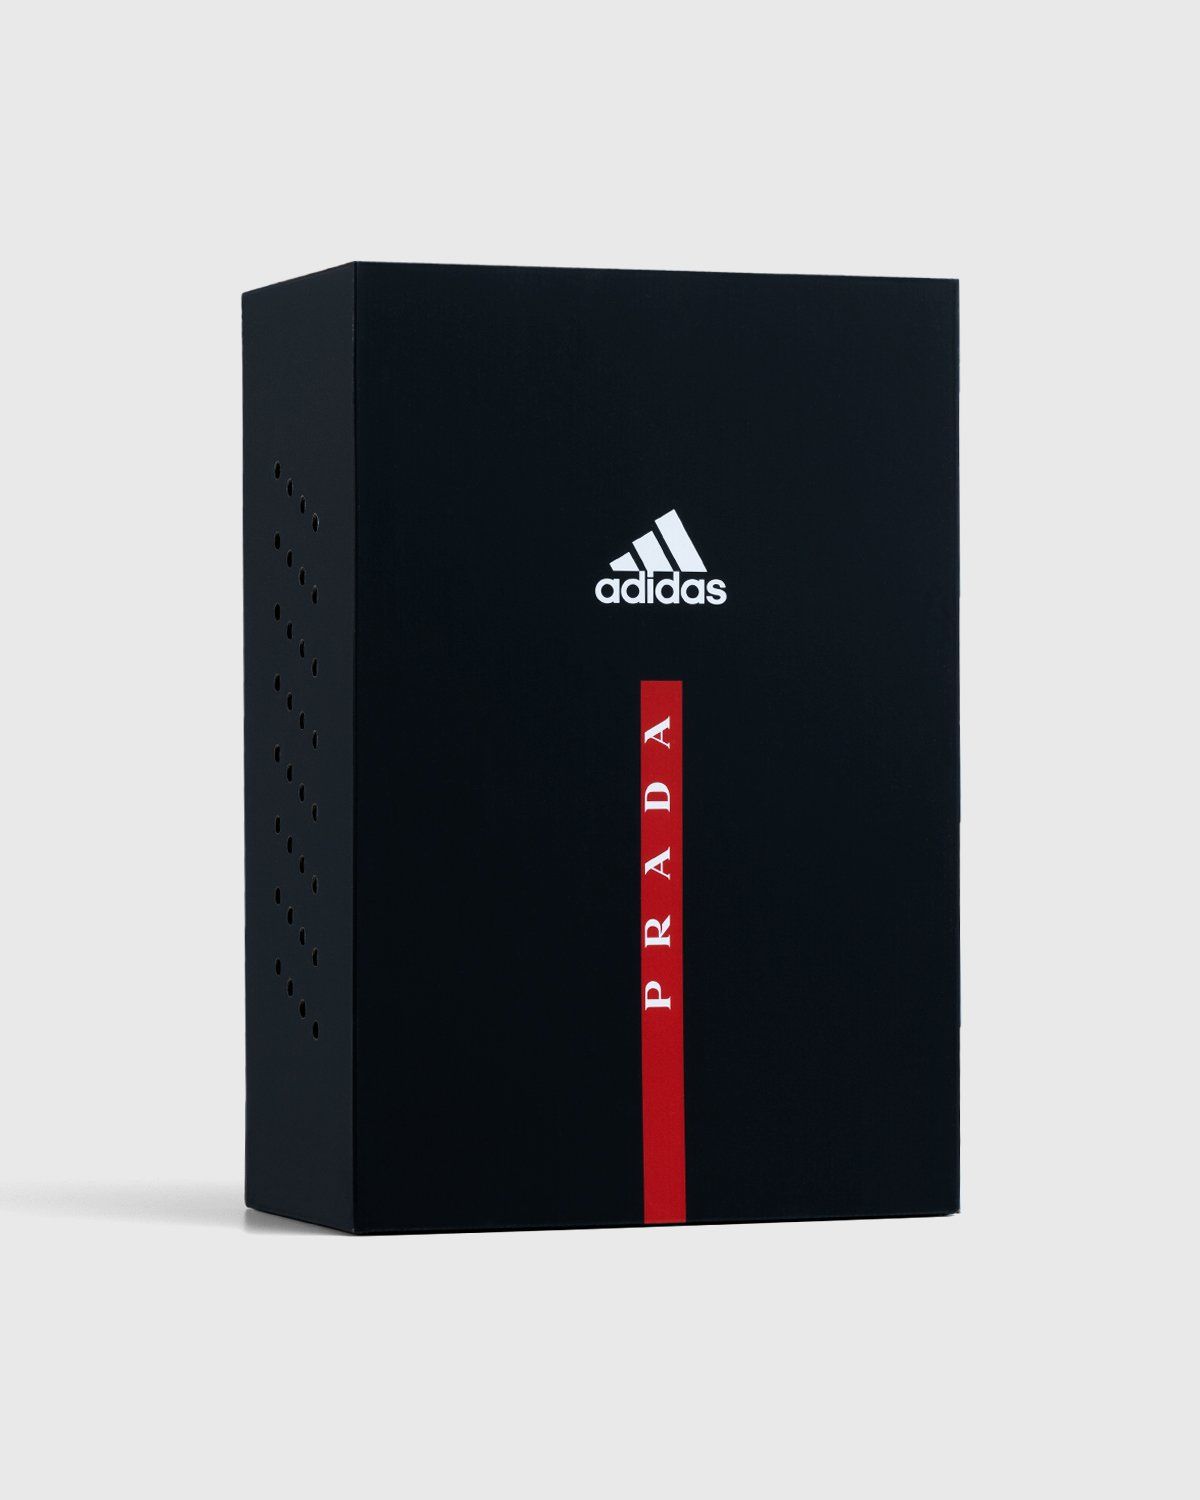 Adidas x Prada – A+P Luna Rossa 21 Performance - Sneakers - Grey - Image 12